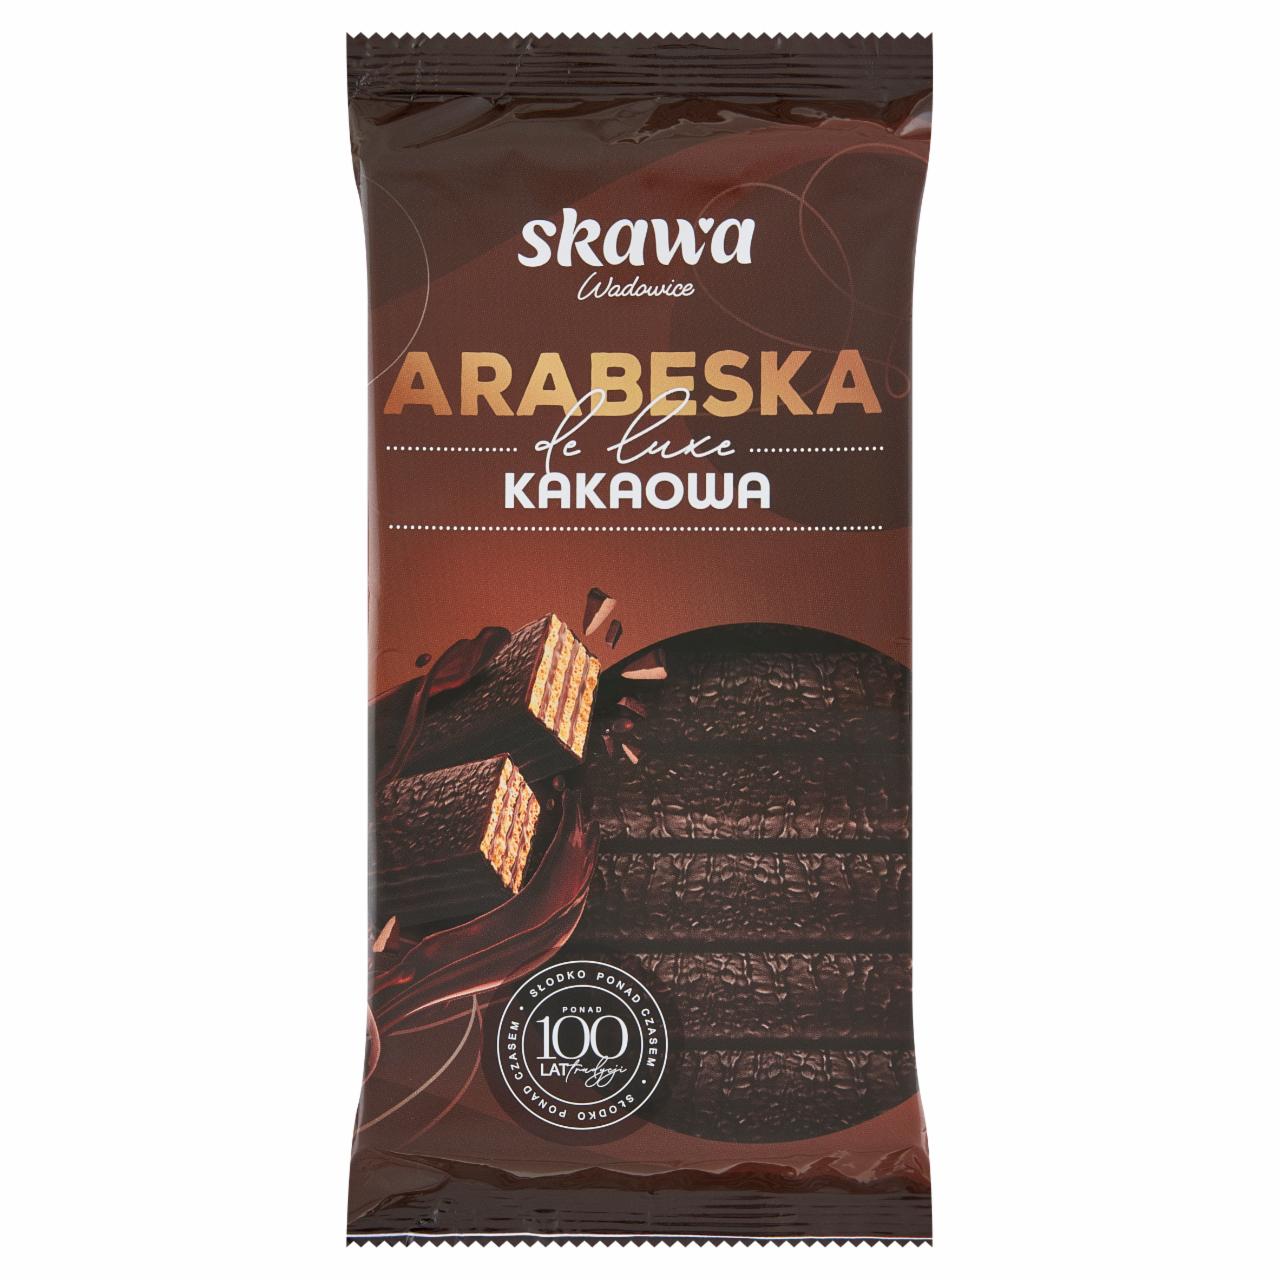 Zdjęcia - Wadowice Skawa Arabeska de luxe kakaowa 190 g